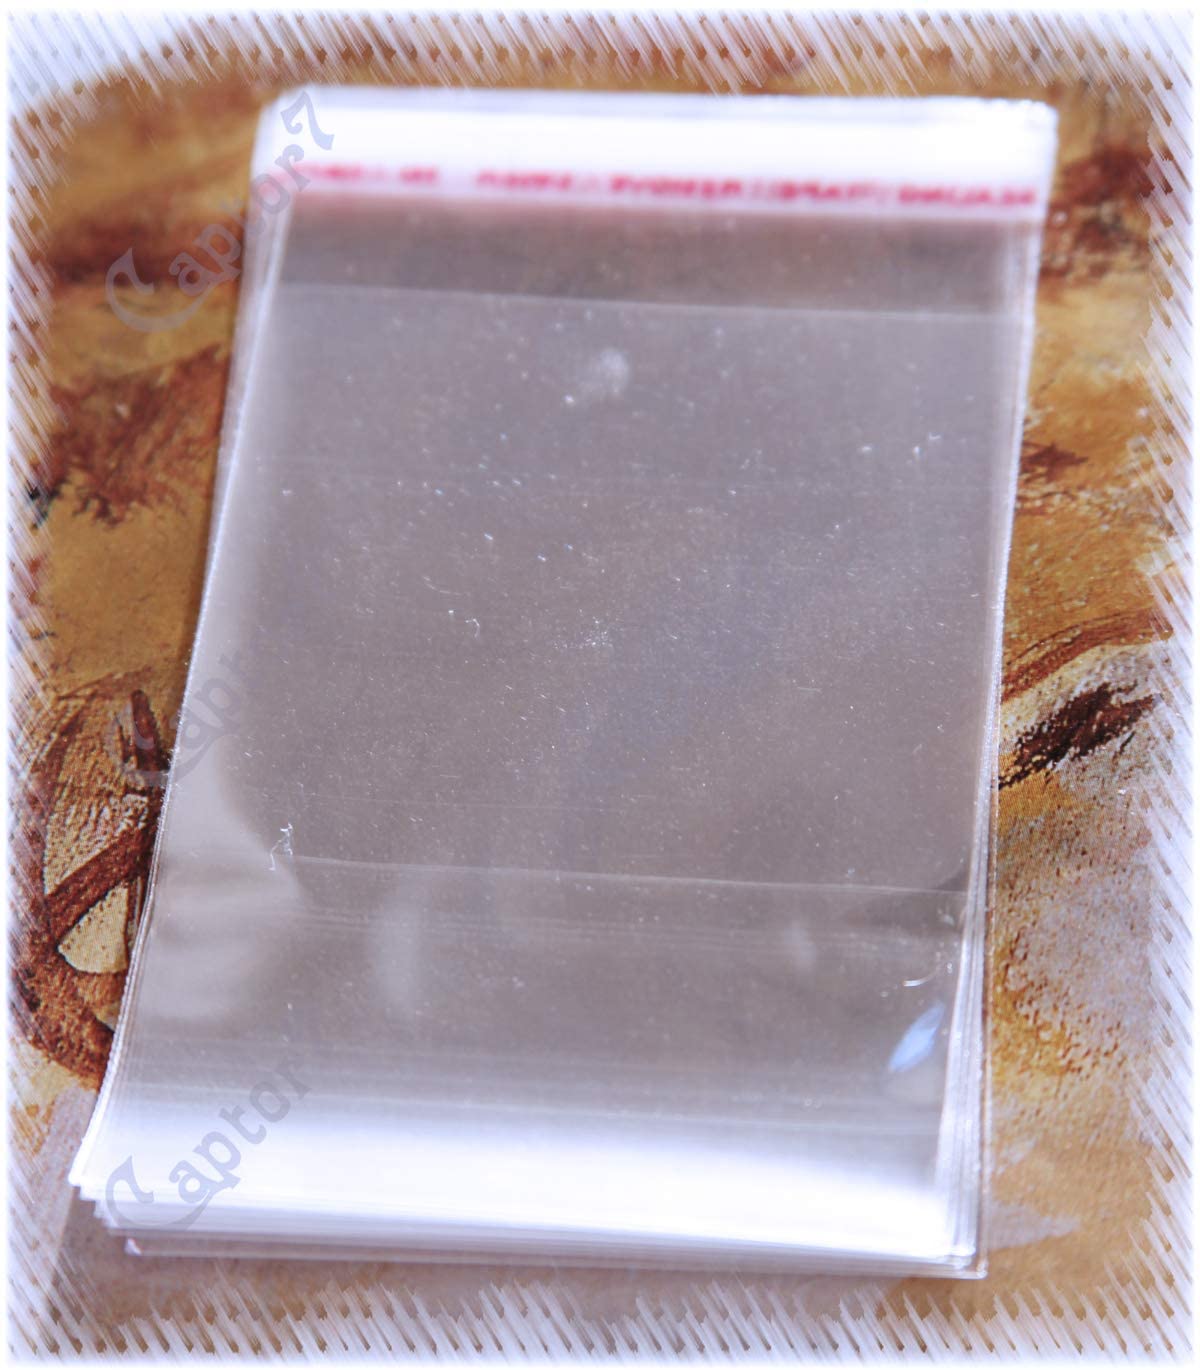 100 BUSTINE TRASPARENTI BUSTE adesive PLASTICA 8 x 5,8 cm CHIUSURA